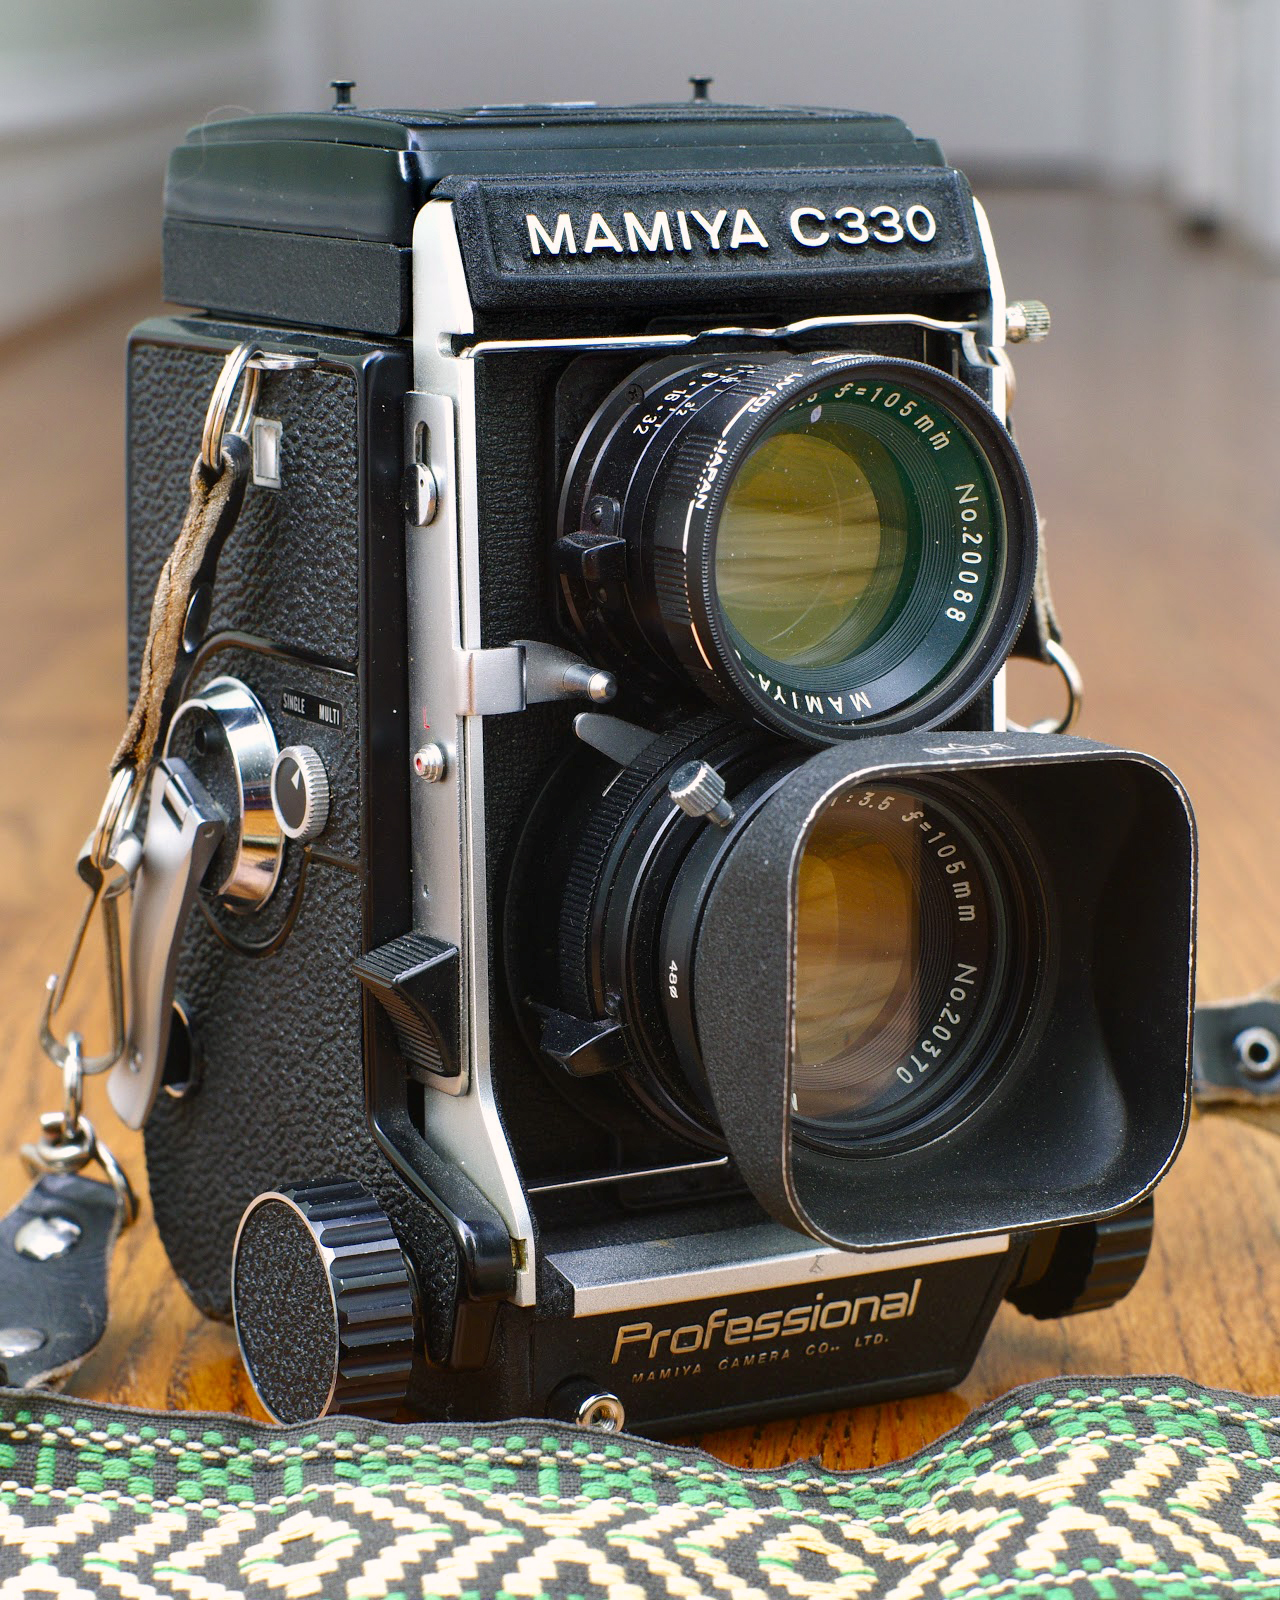 The Mamiya C330, my main camera, is a thing of pure beauty. 